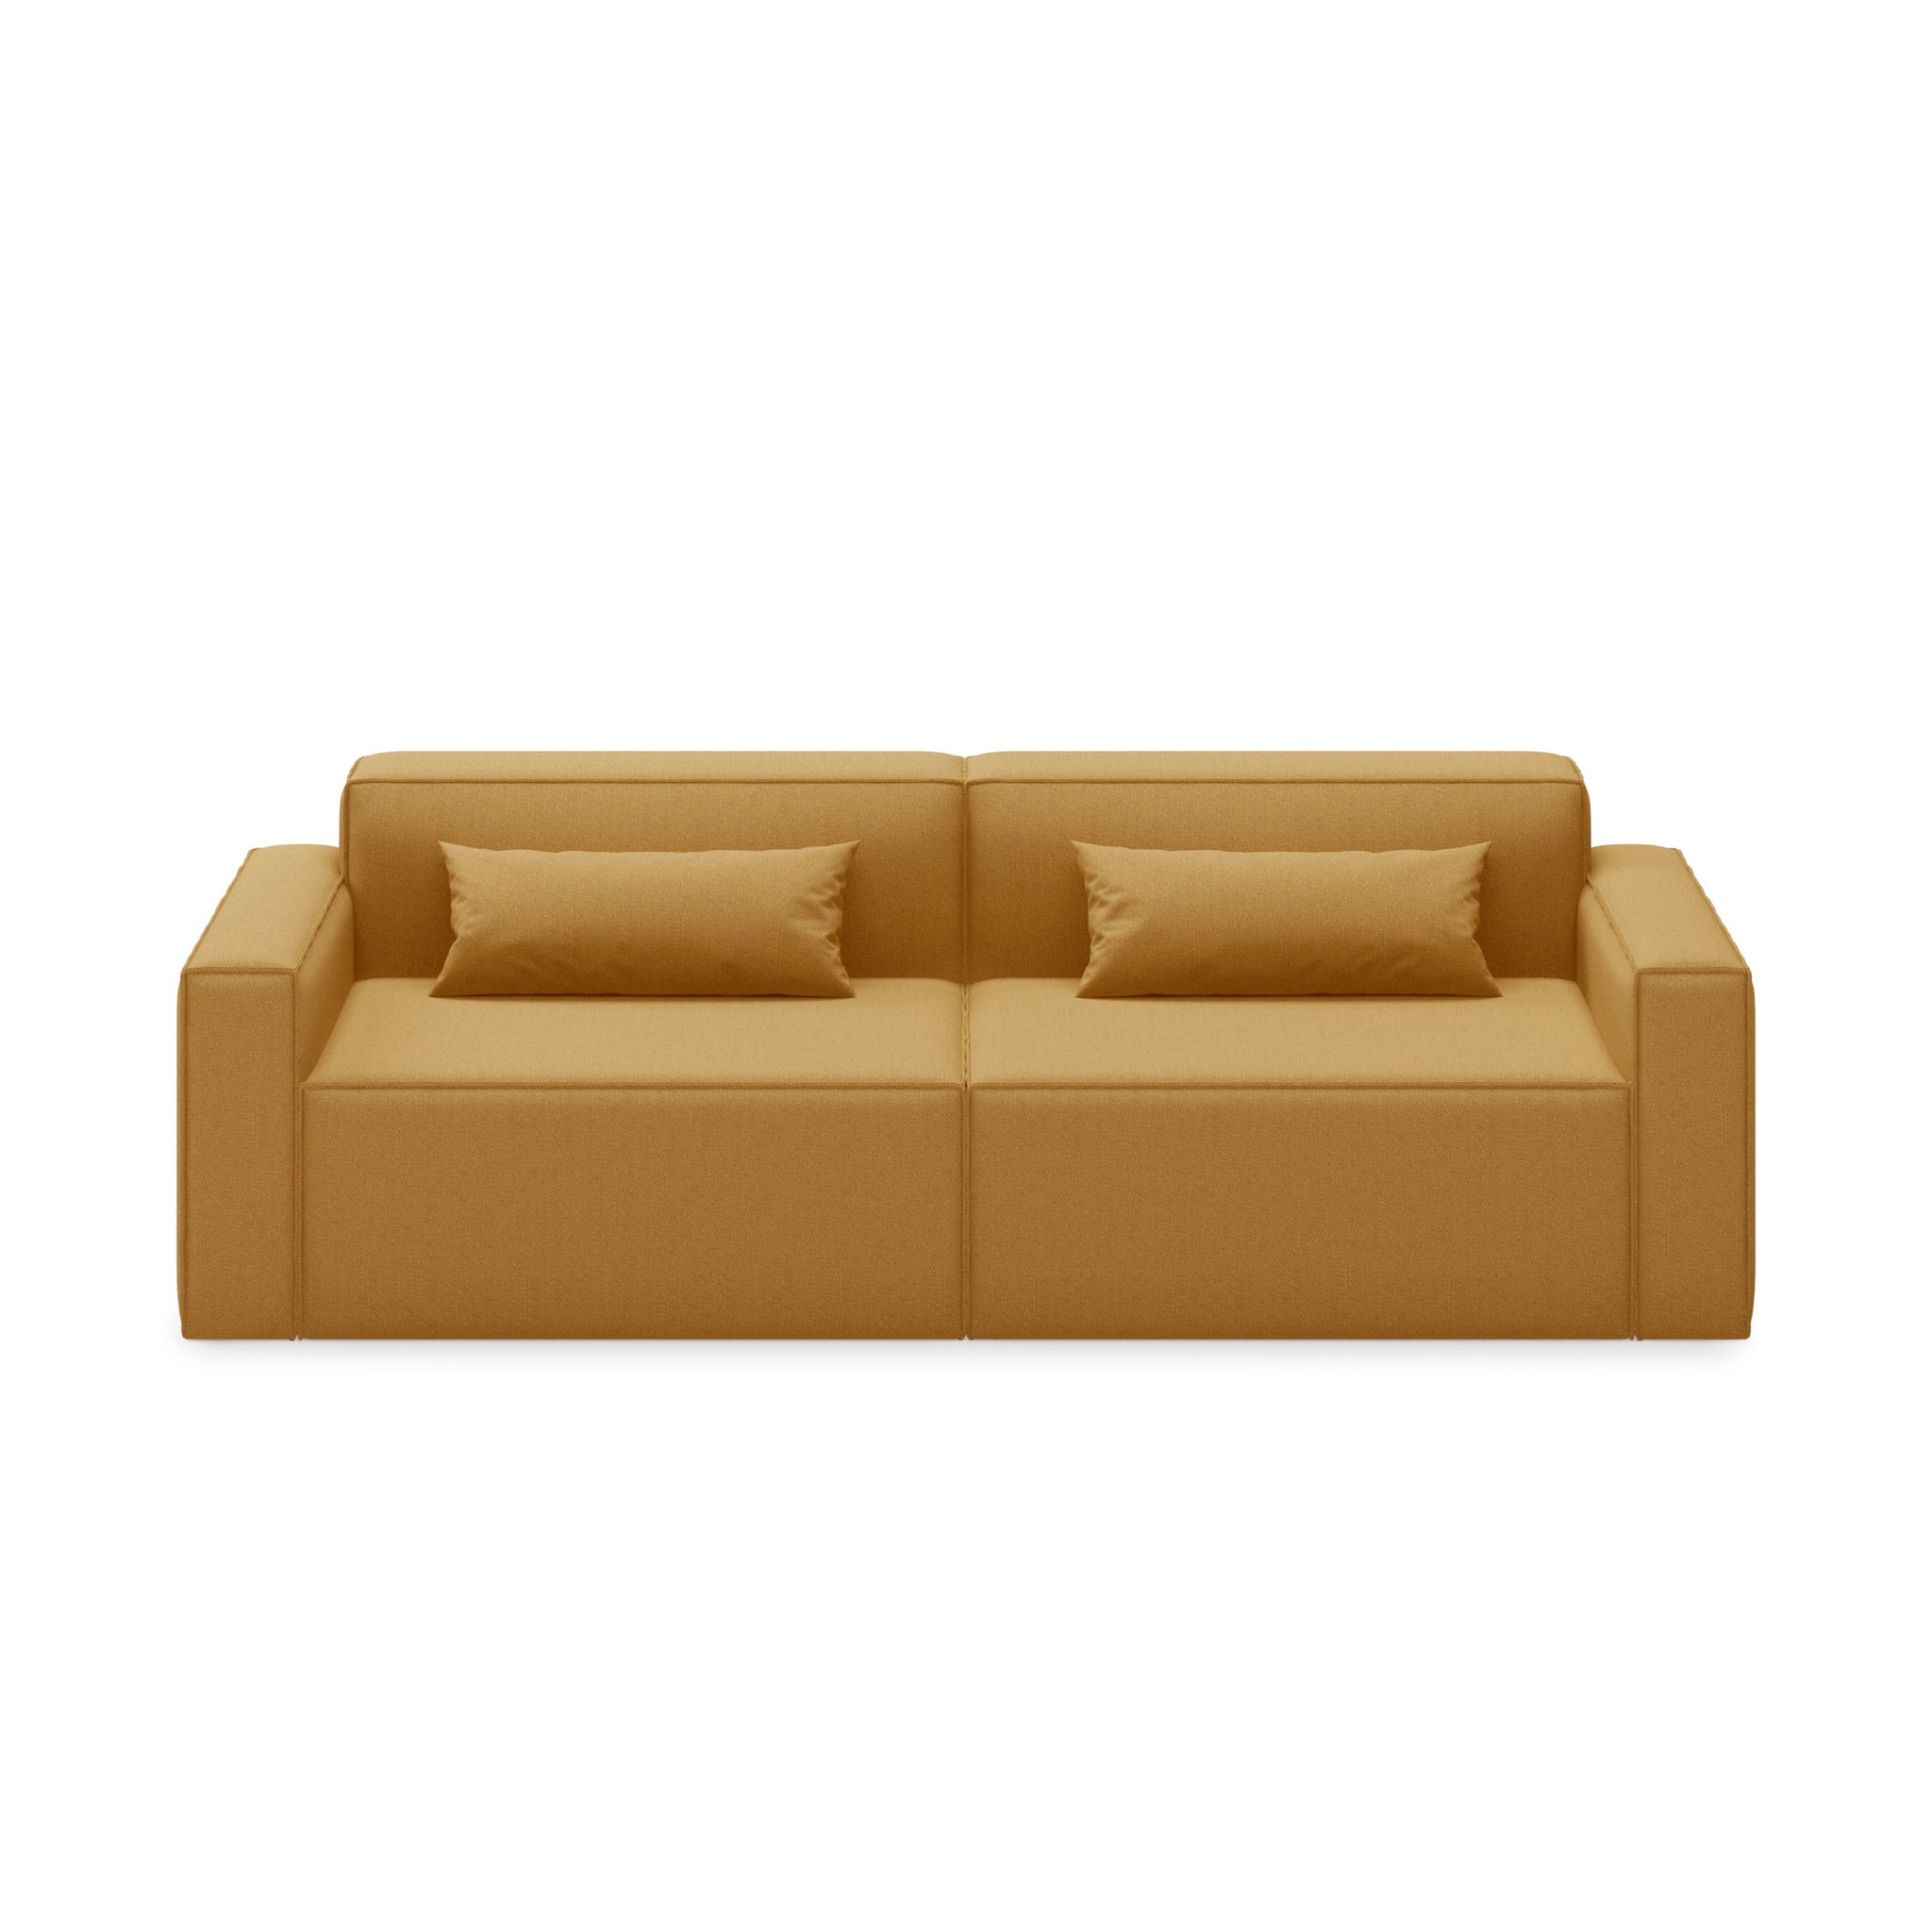 Mix Modular Sofa 2 Pc Stylegarage